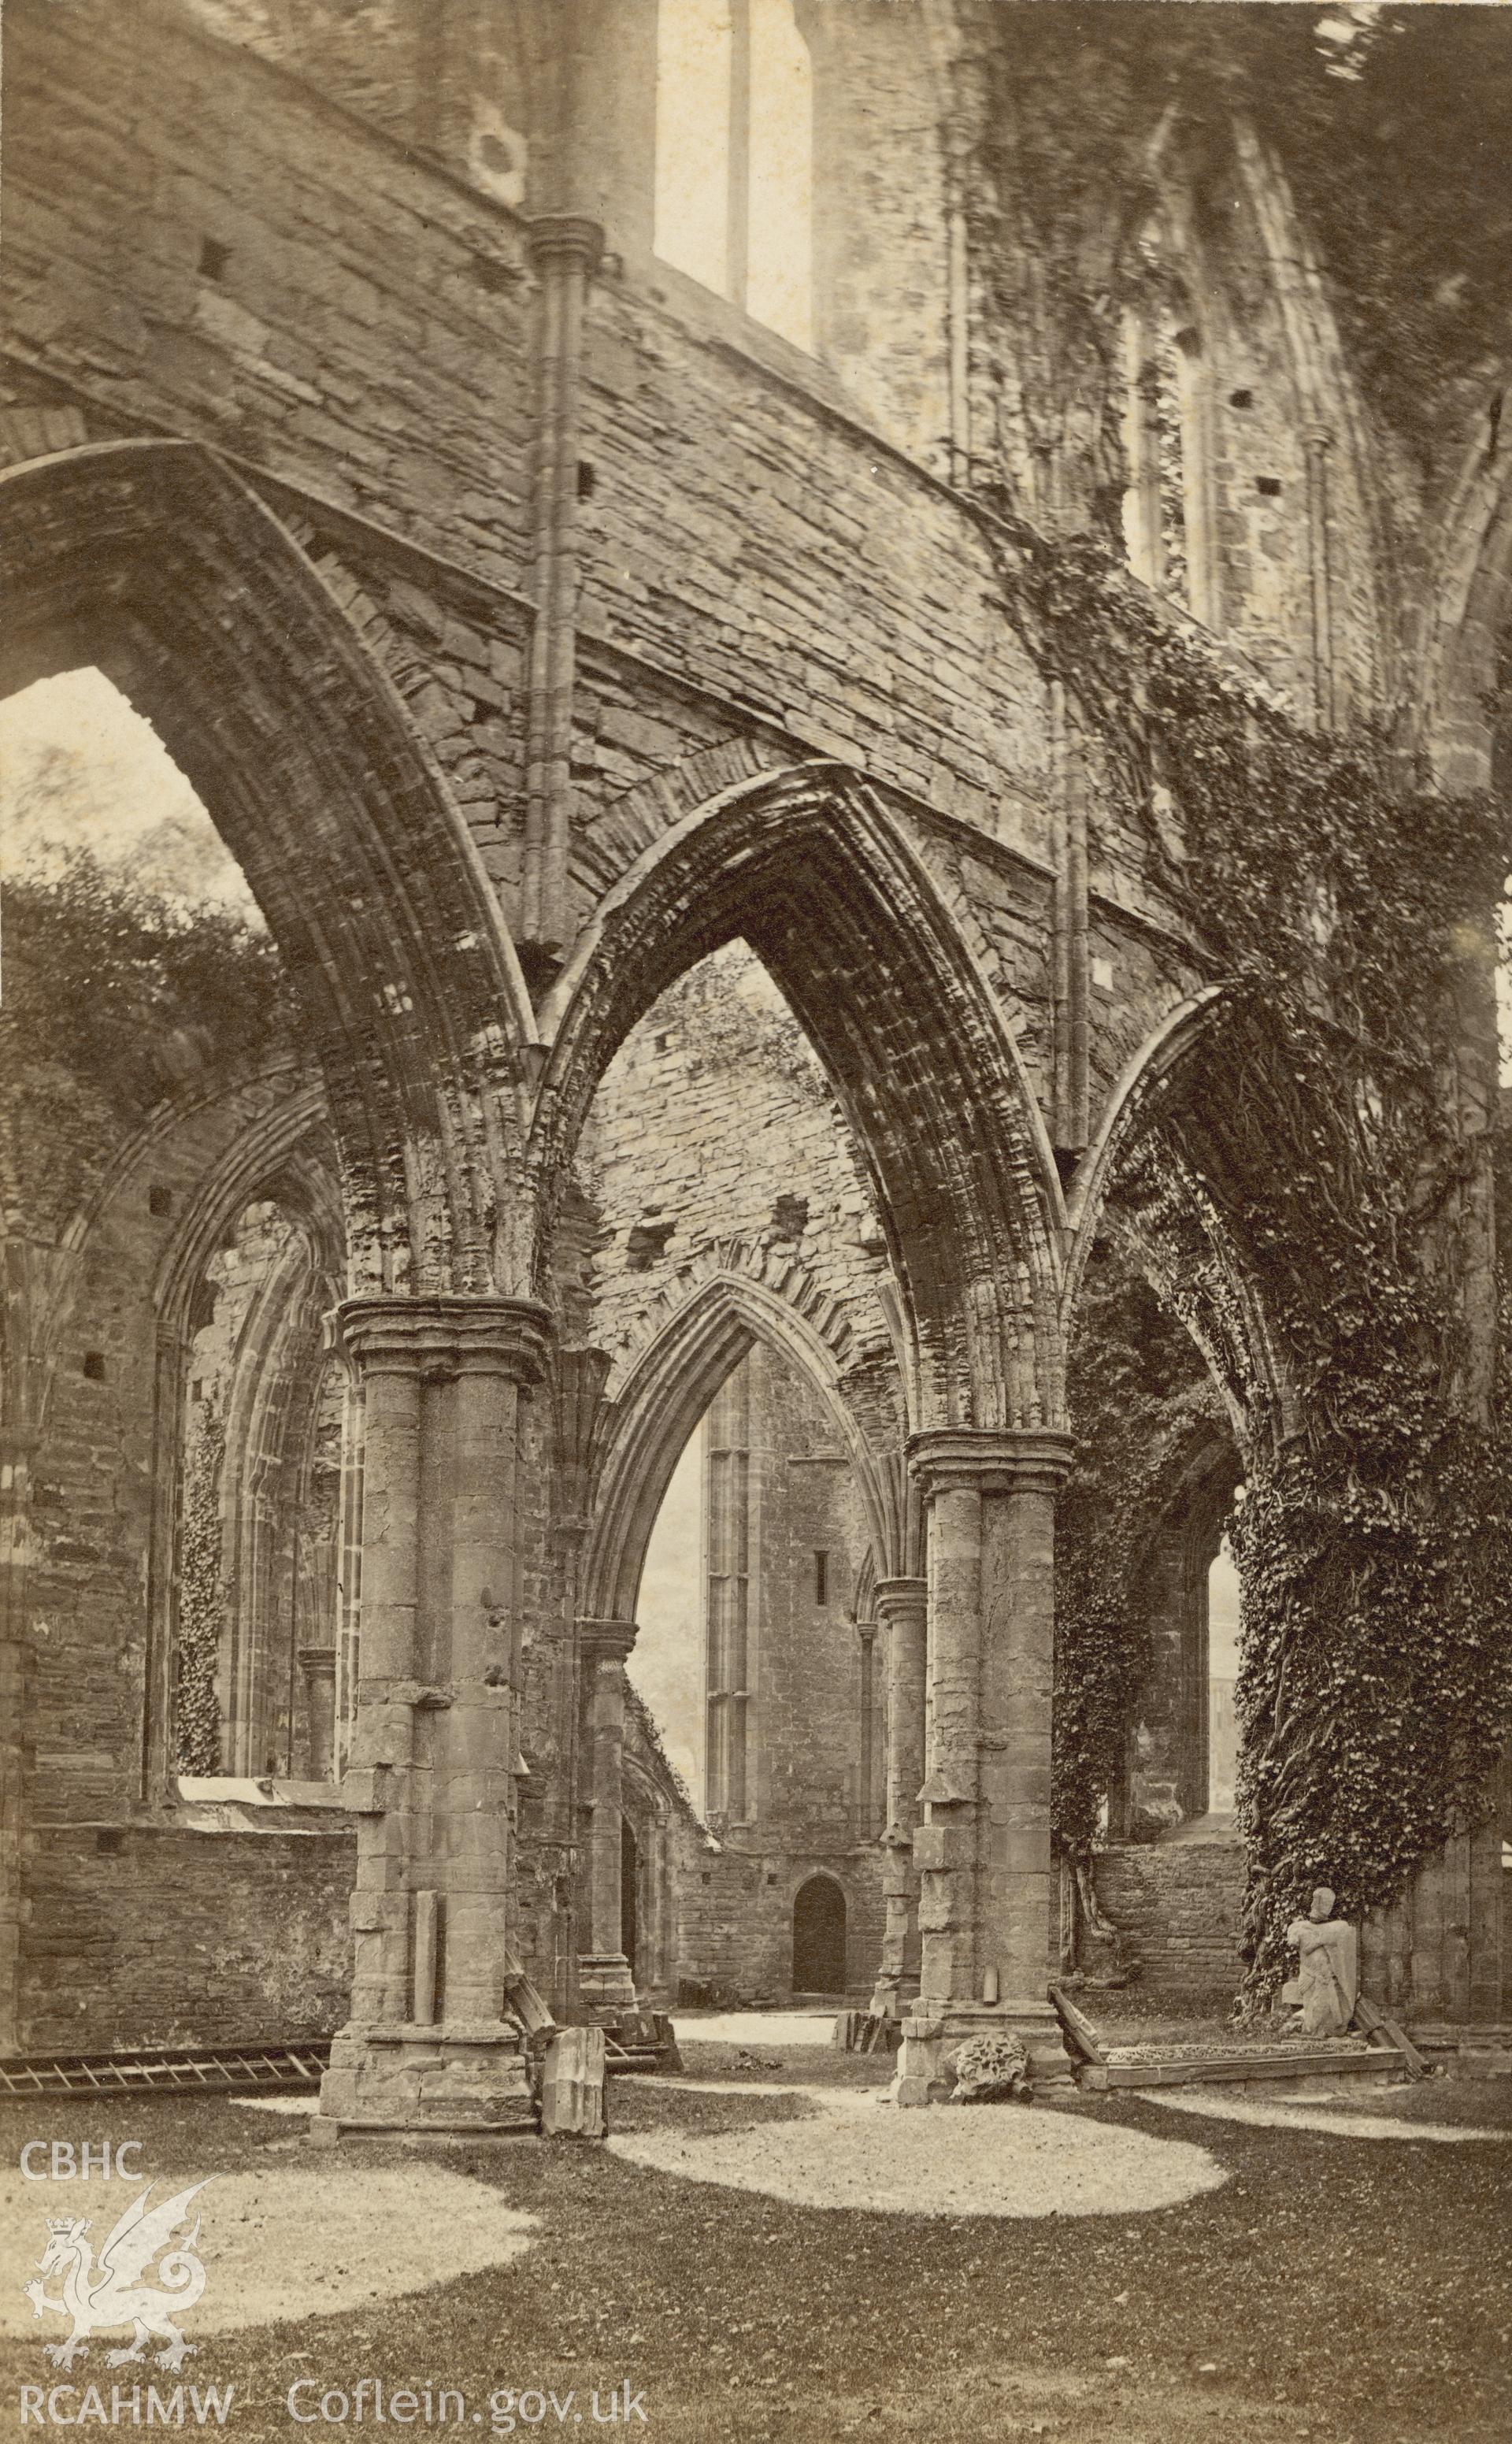 Digital copy of a circa 1870 albumen print of an interior view of Tintern Abbey showing chancel arcade.